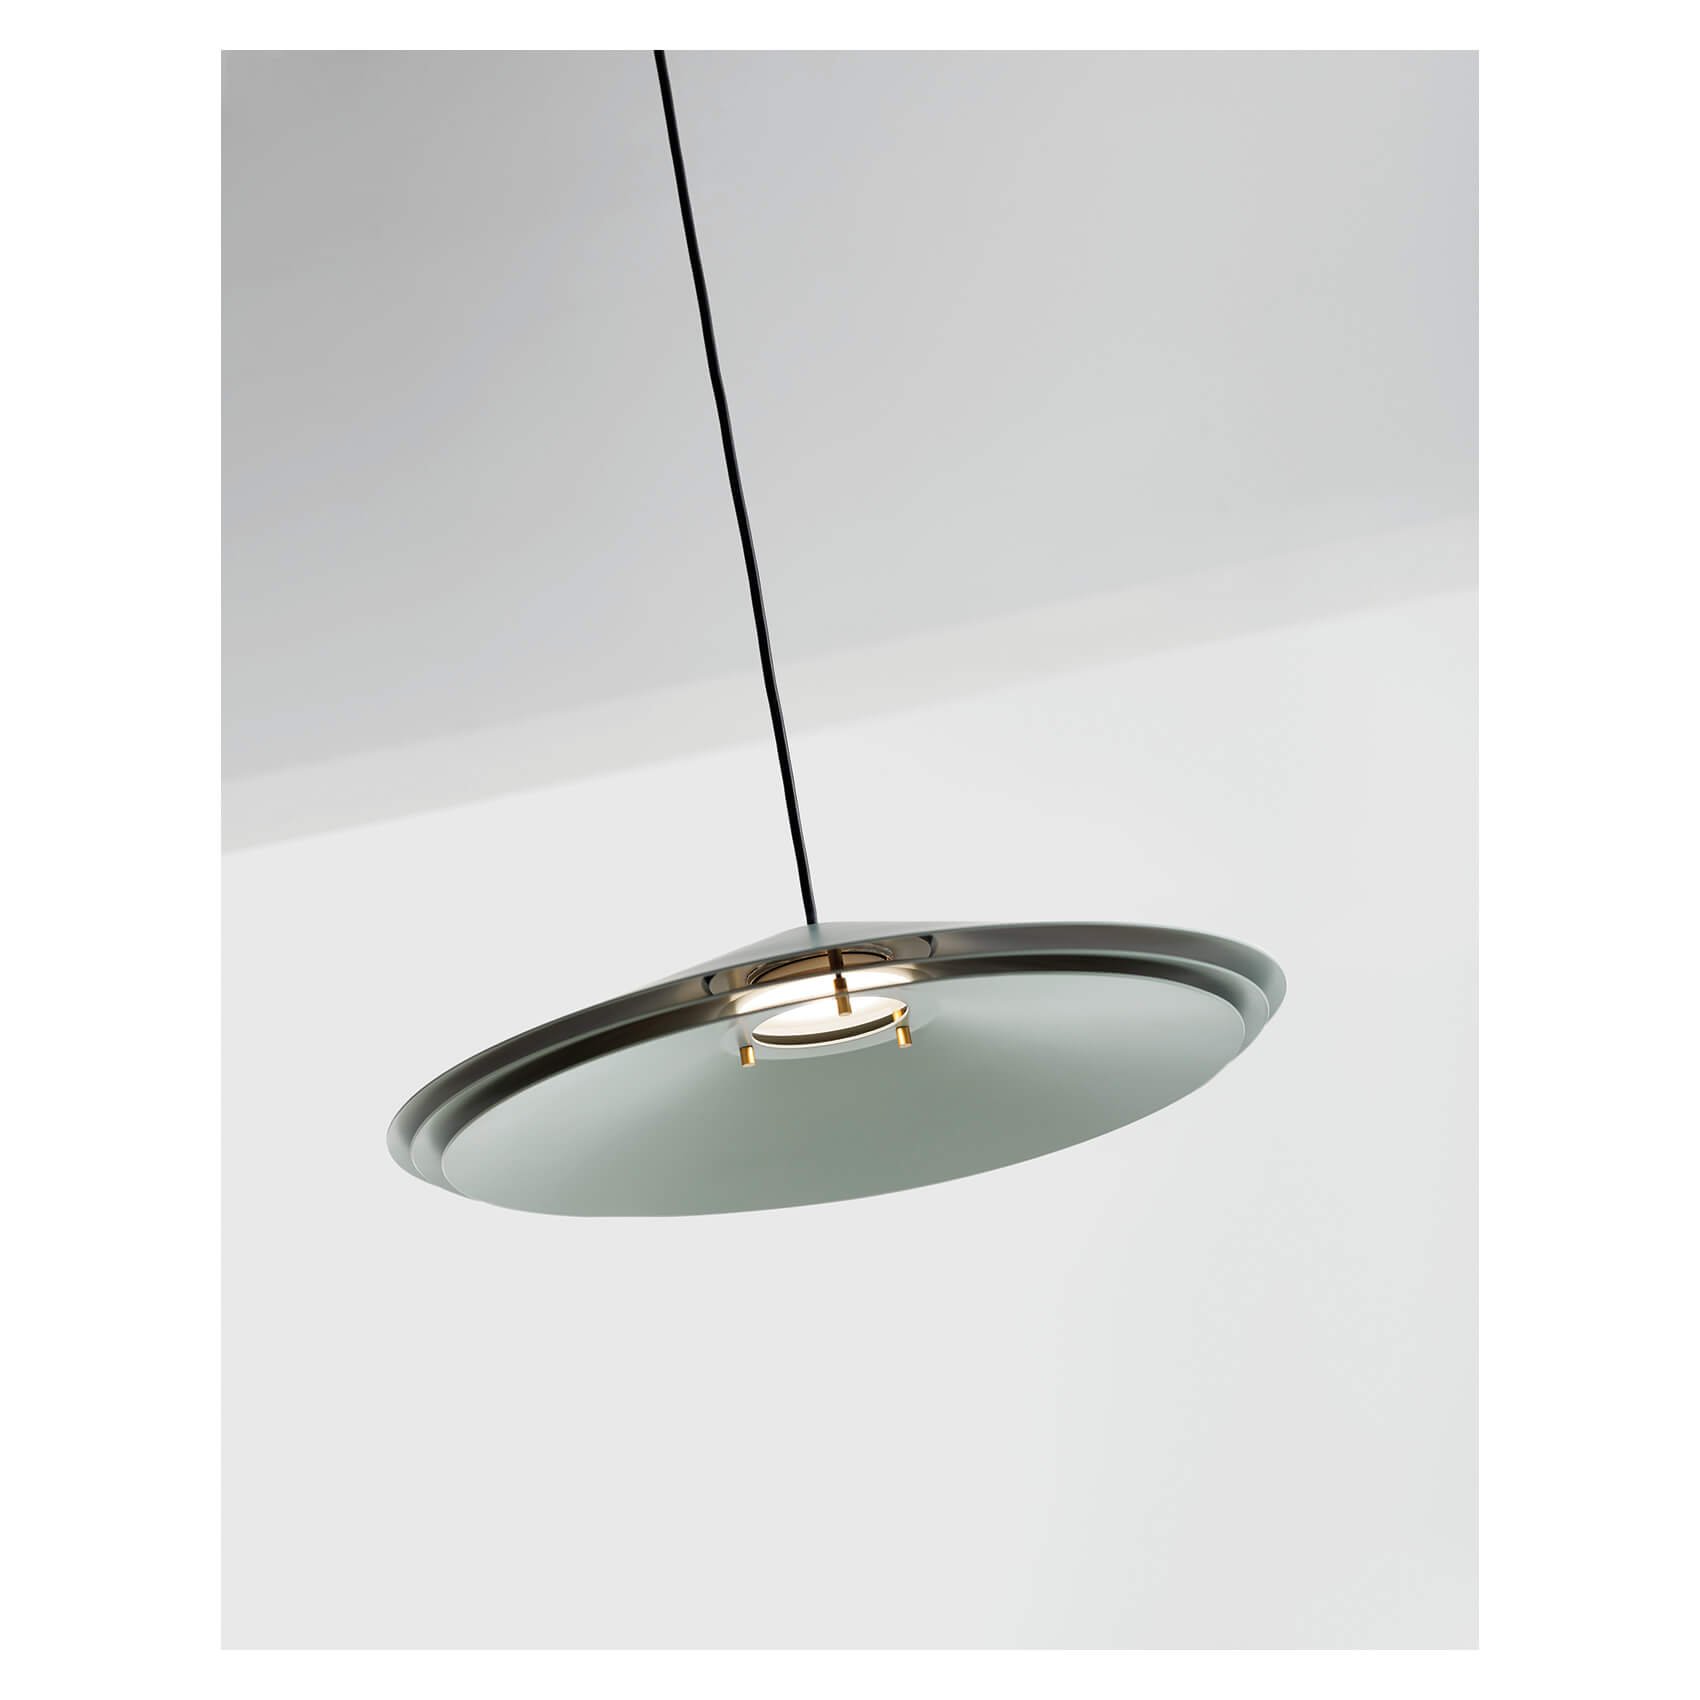 Suspension-lamp-Colette-3041700-metal-mintgreen-Ø40cm-Carpyen(2).jpg